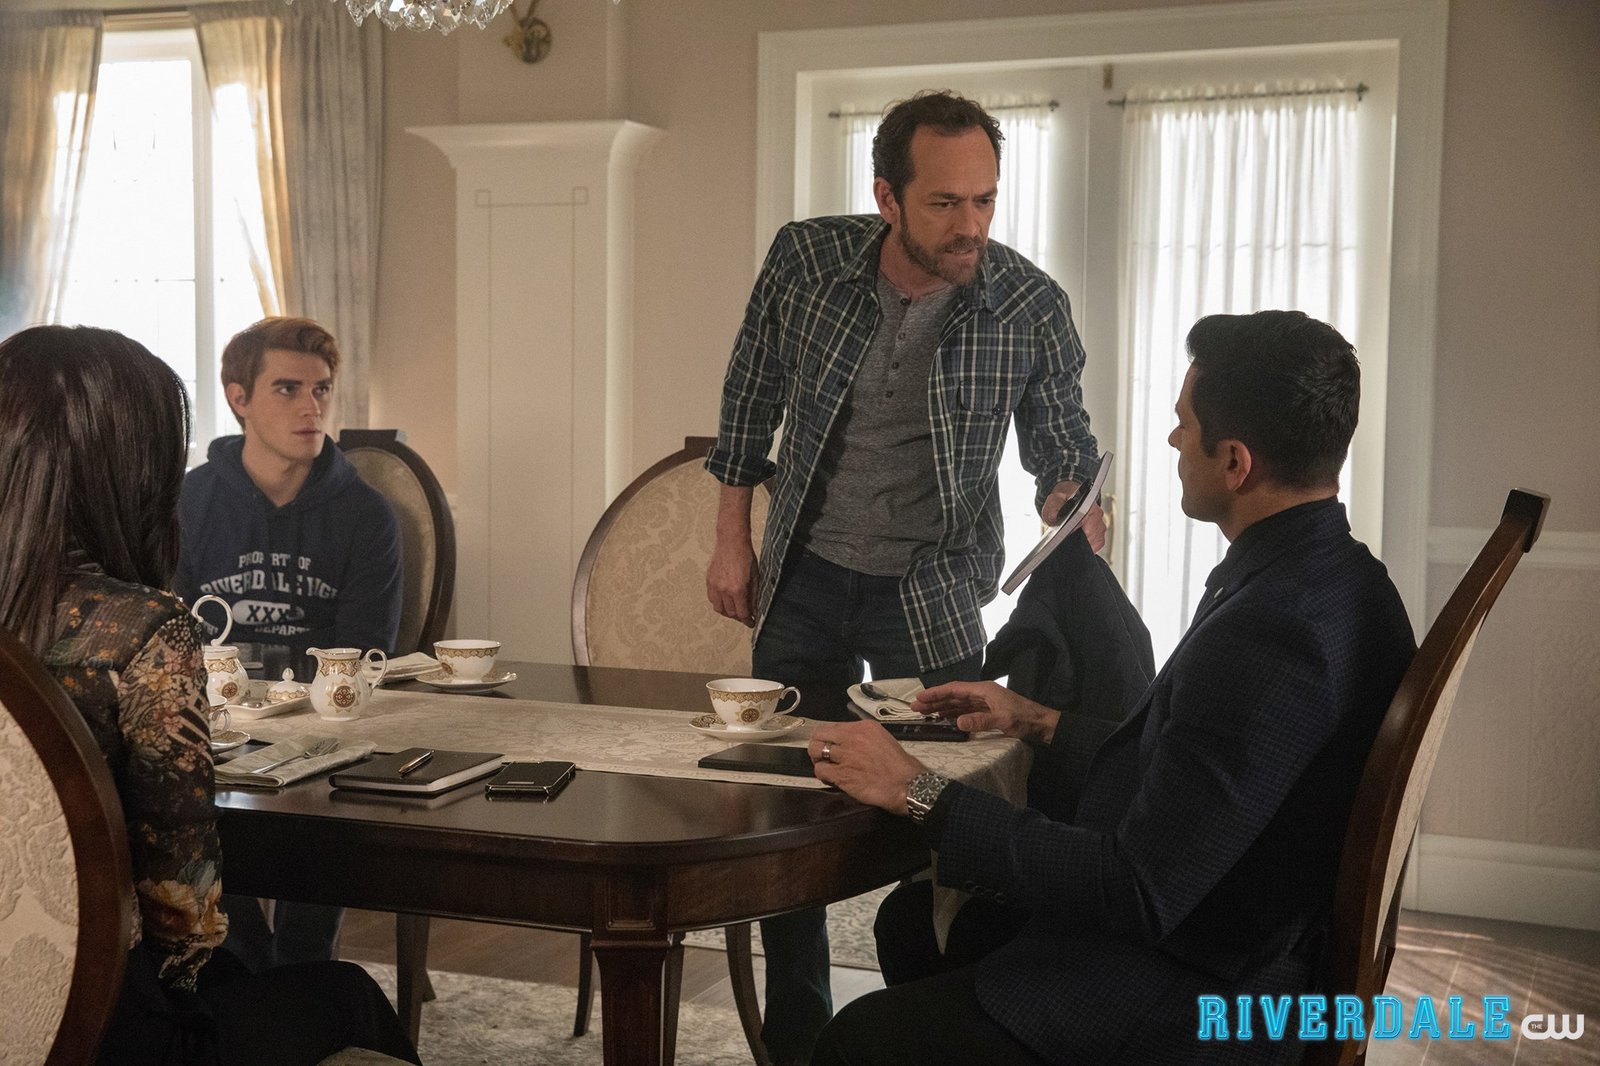 ‘Riverdale’ Writers Start Tweaking Season 3 Scripts In Wake of Luke Perry’s Death